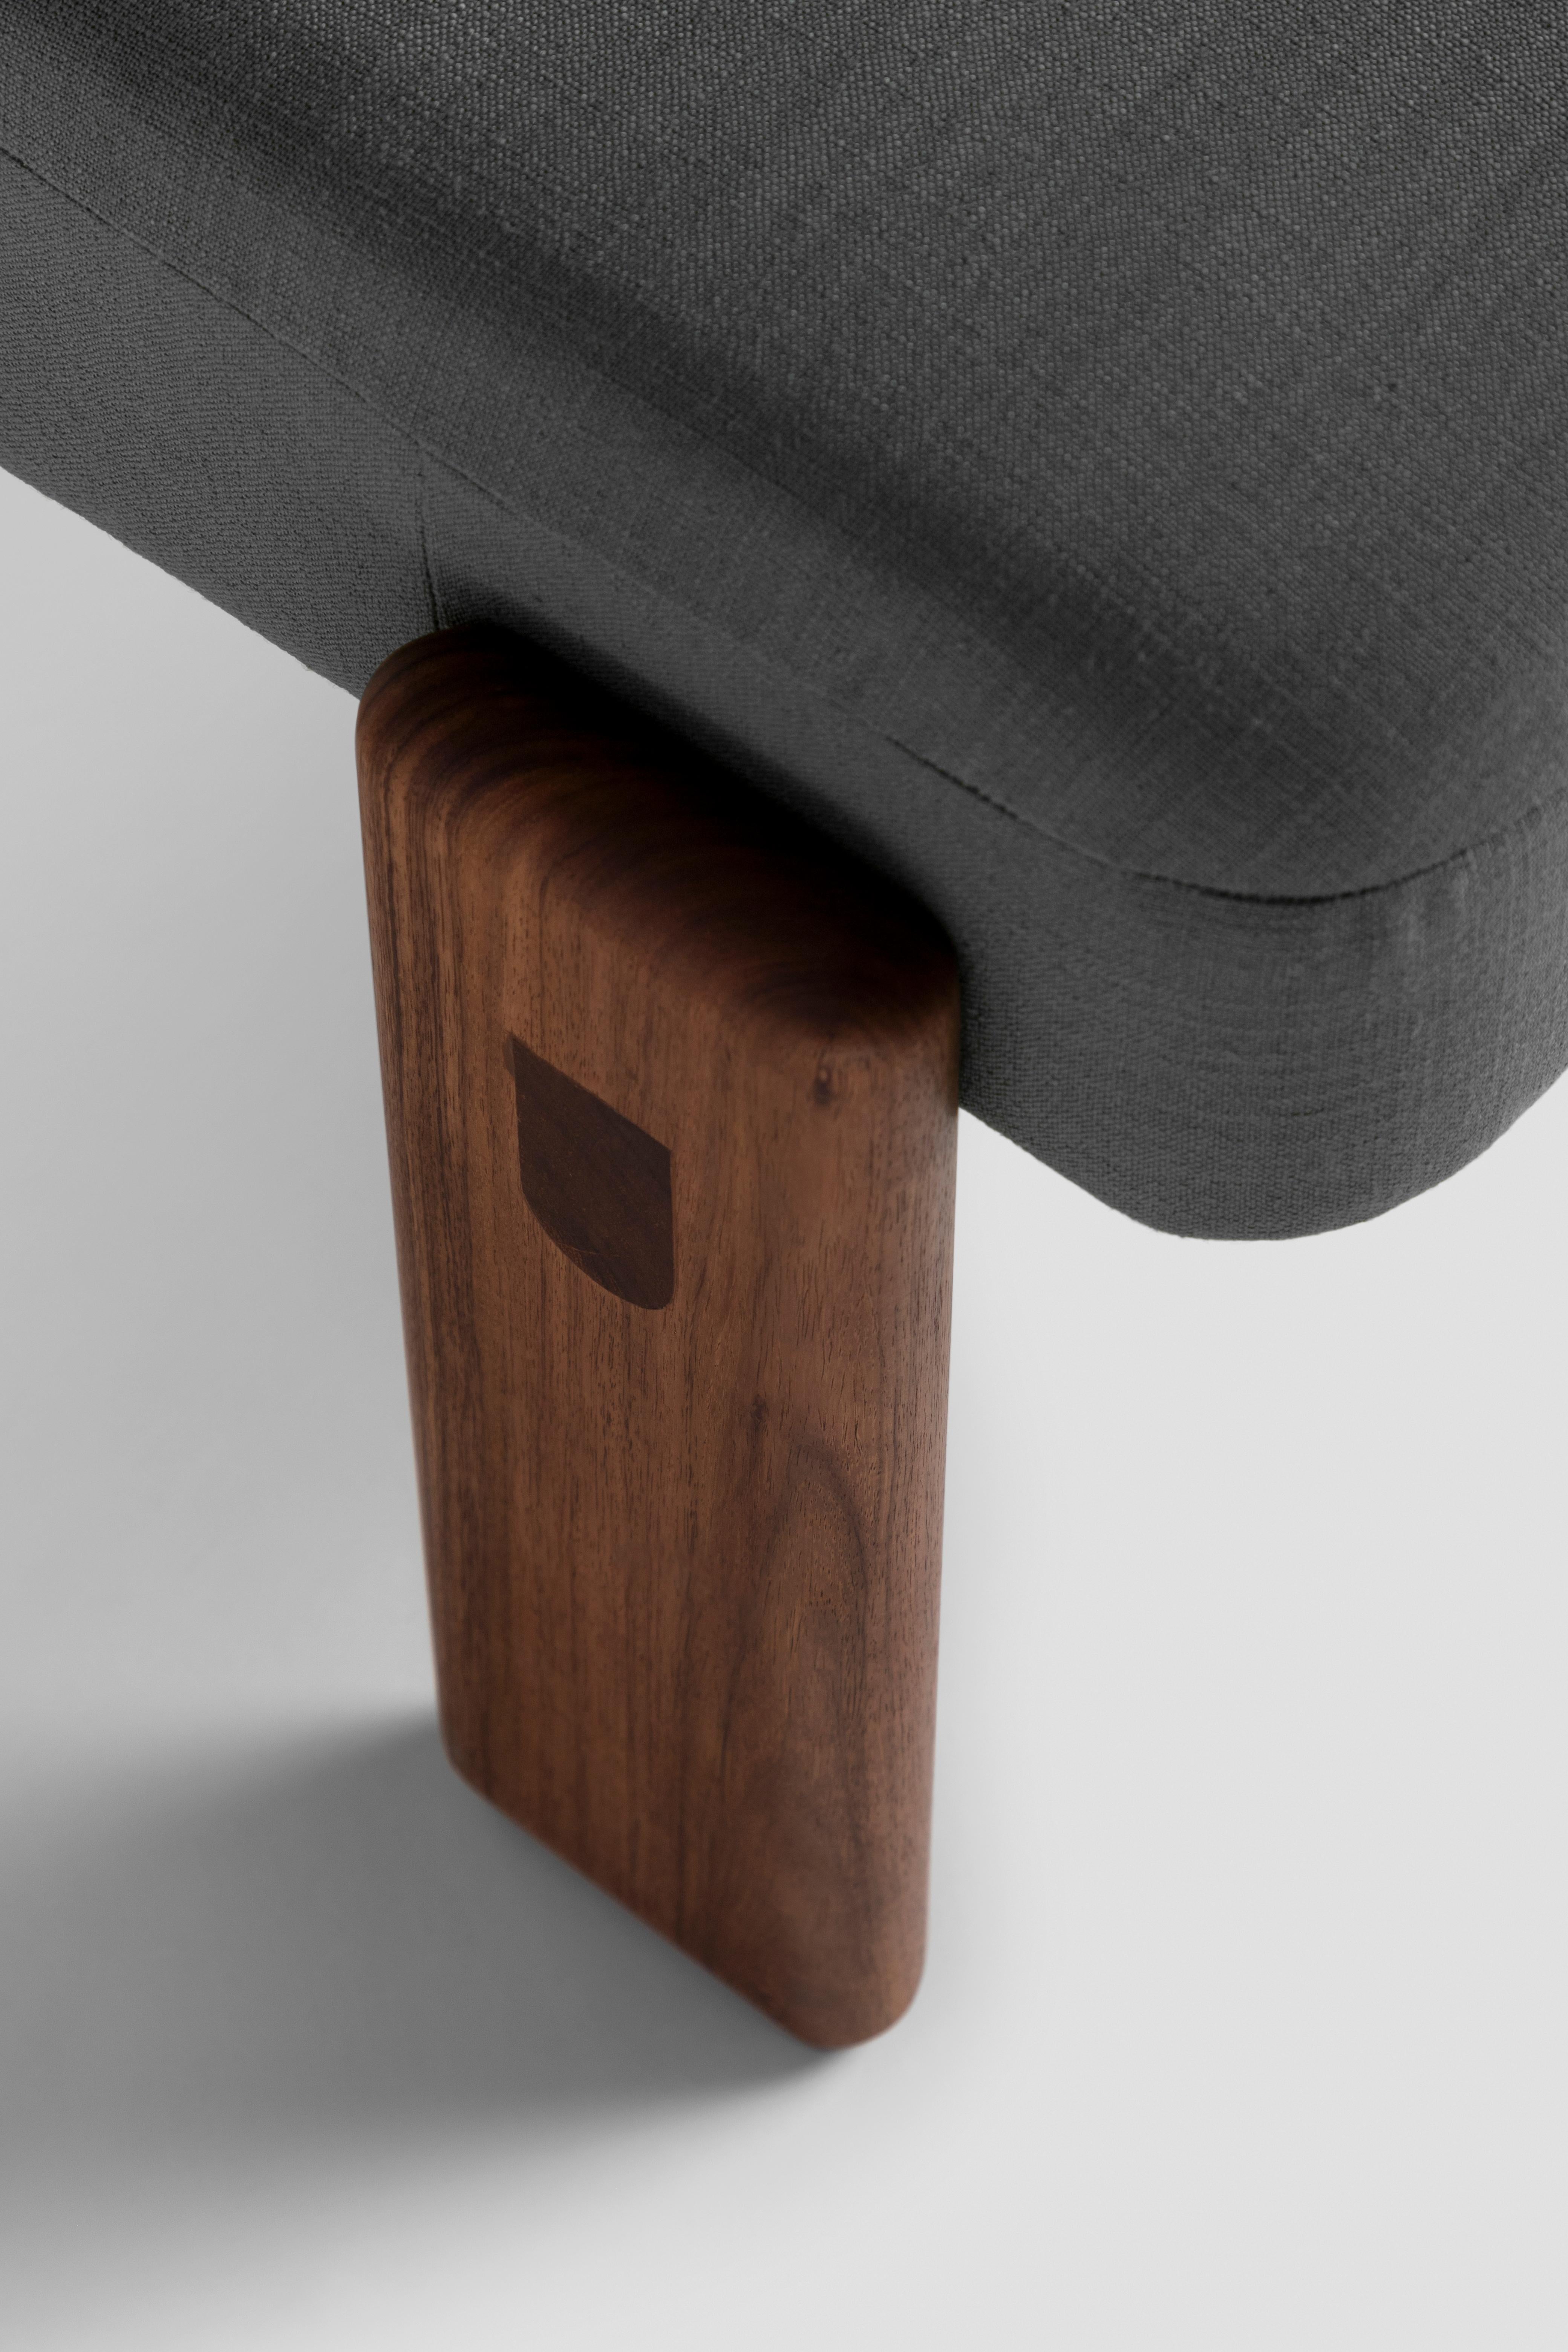 De la Paz Dining Chair Solid Wood, Contemporary Mexican Design For Sale 4